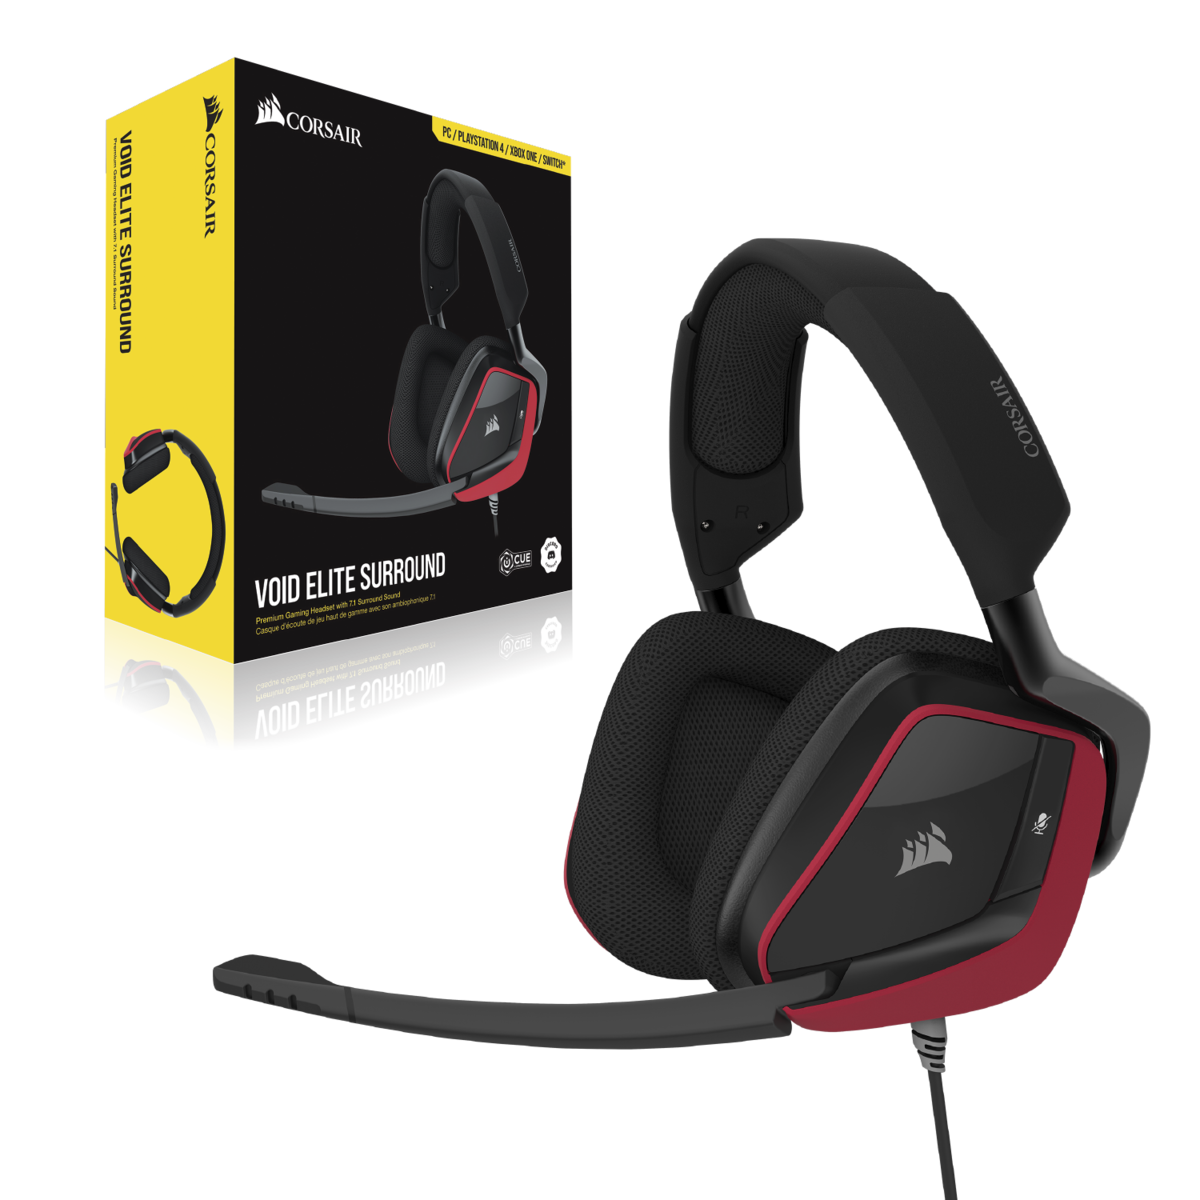 Voorafgaan Gluren Aanhankelijk NEW Corsair VOID ELITE SURROUND Premium Gaming Headset Cherry 7.1 Surround  Sound | eBay